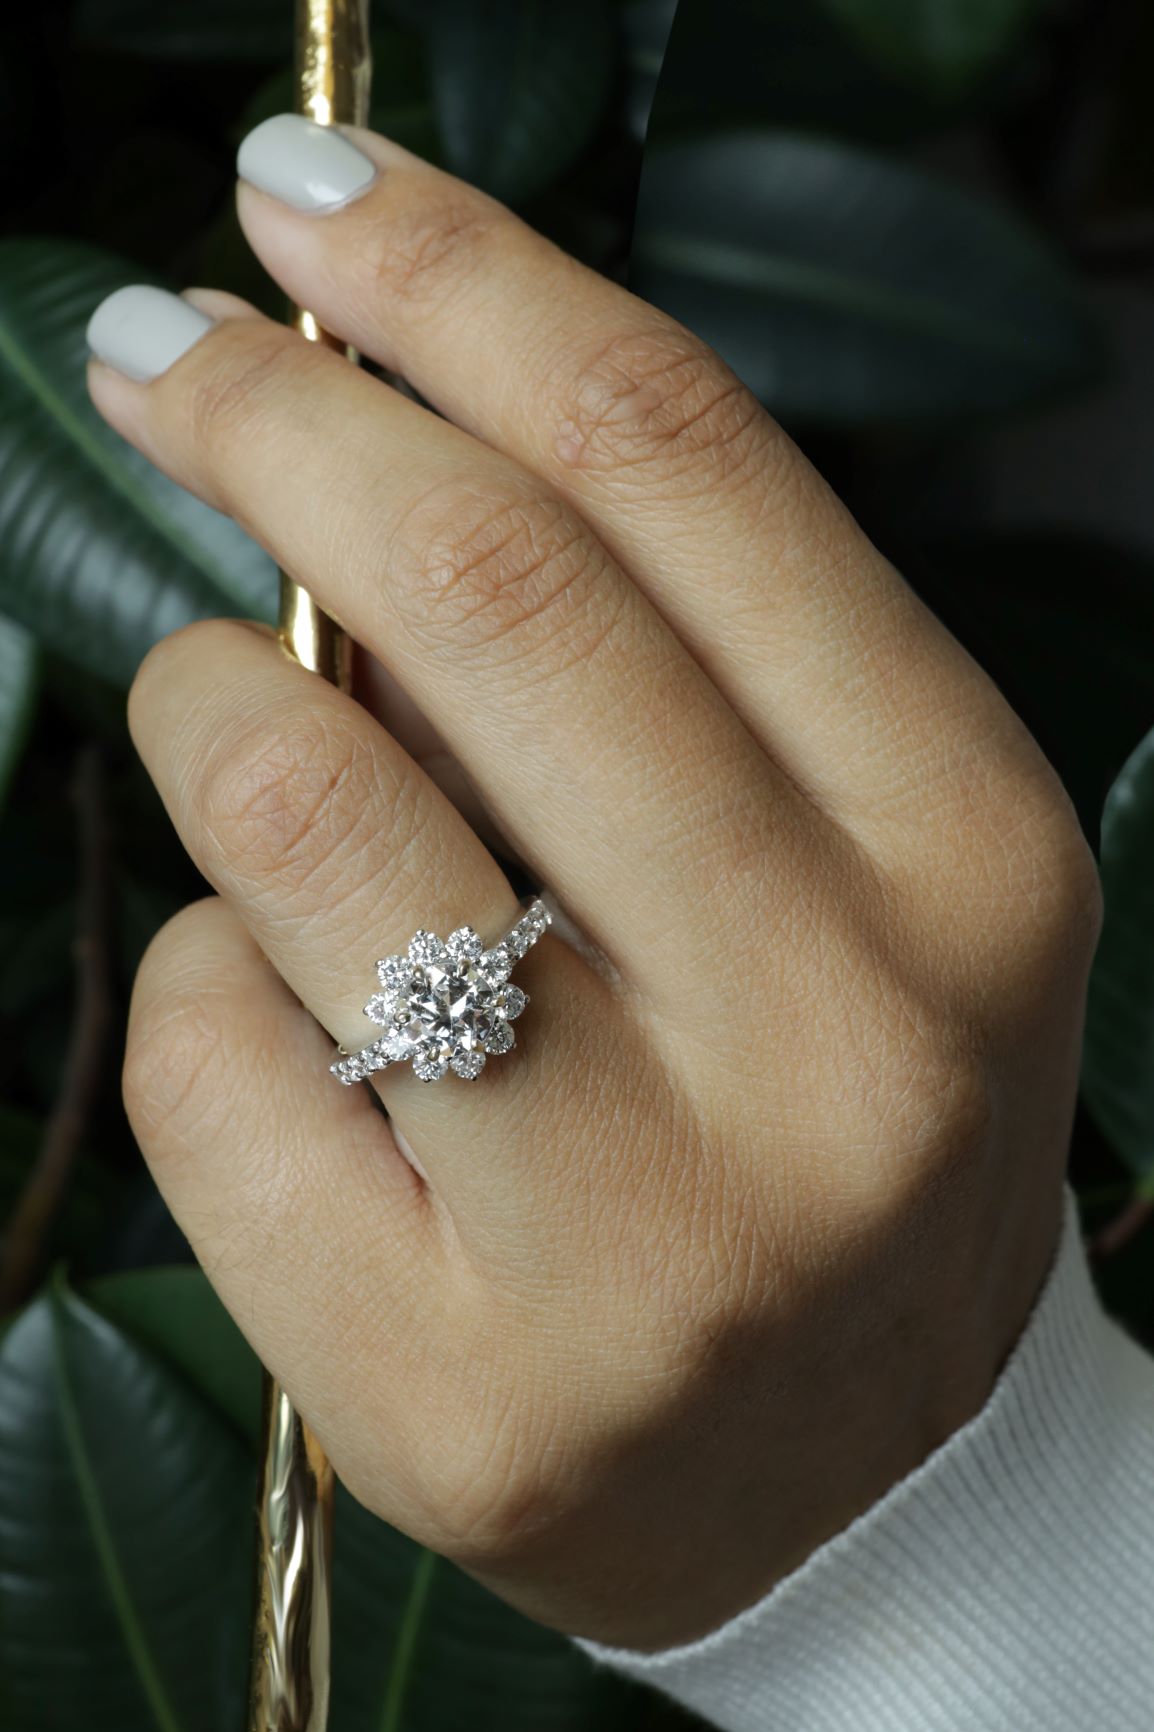 2 ctw Vintage-Style Diamond Engagement Ring 18k